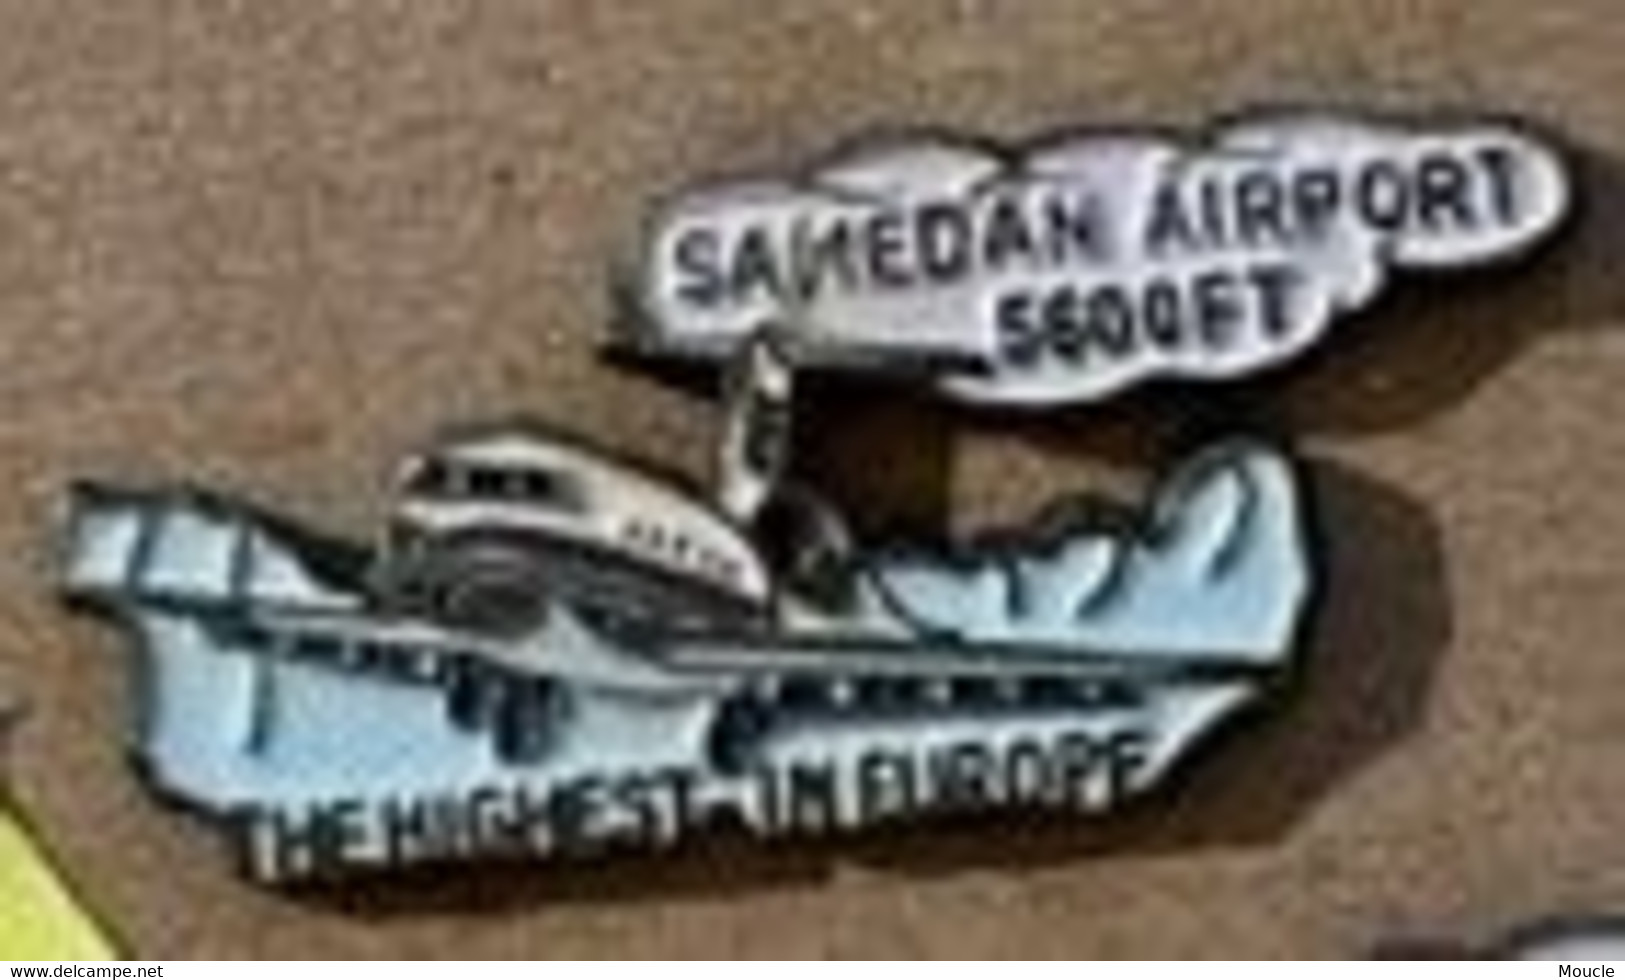 SAMEDAN AIRPORT 5600ft - THE HIGHEST IN EUROPE - PLANE - AVION - FOND BLANC - FLUGZEUG - AEREO-     (24) - Aviones